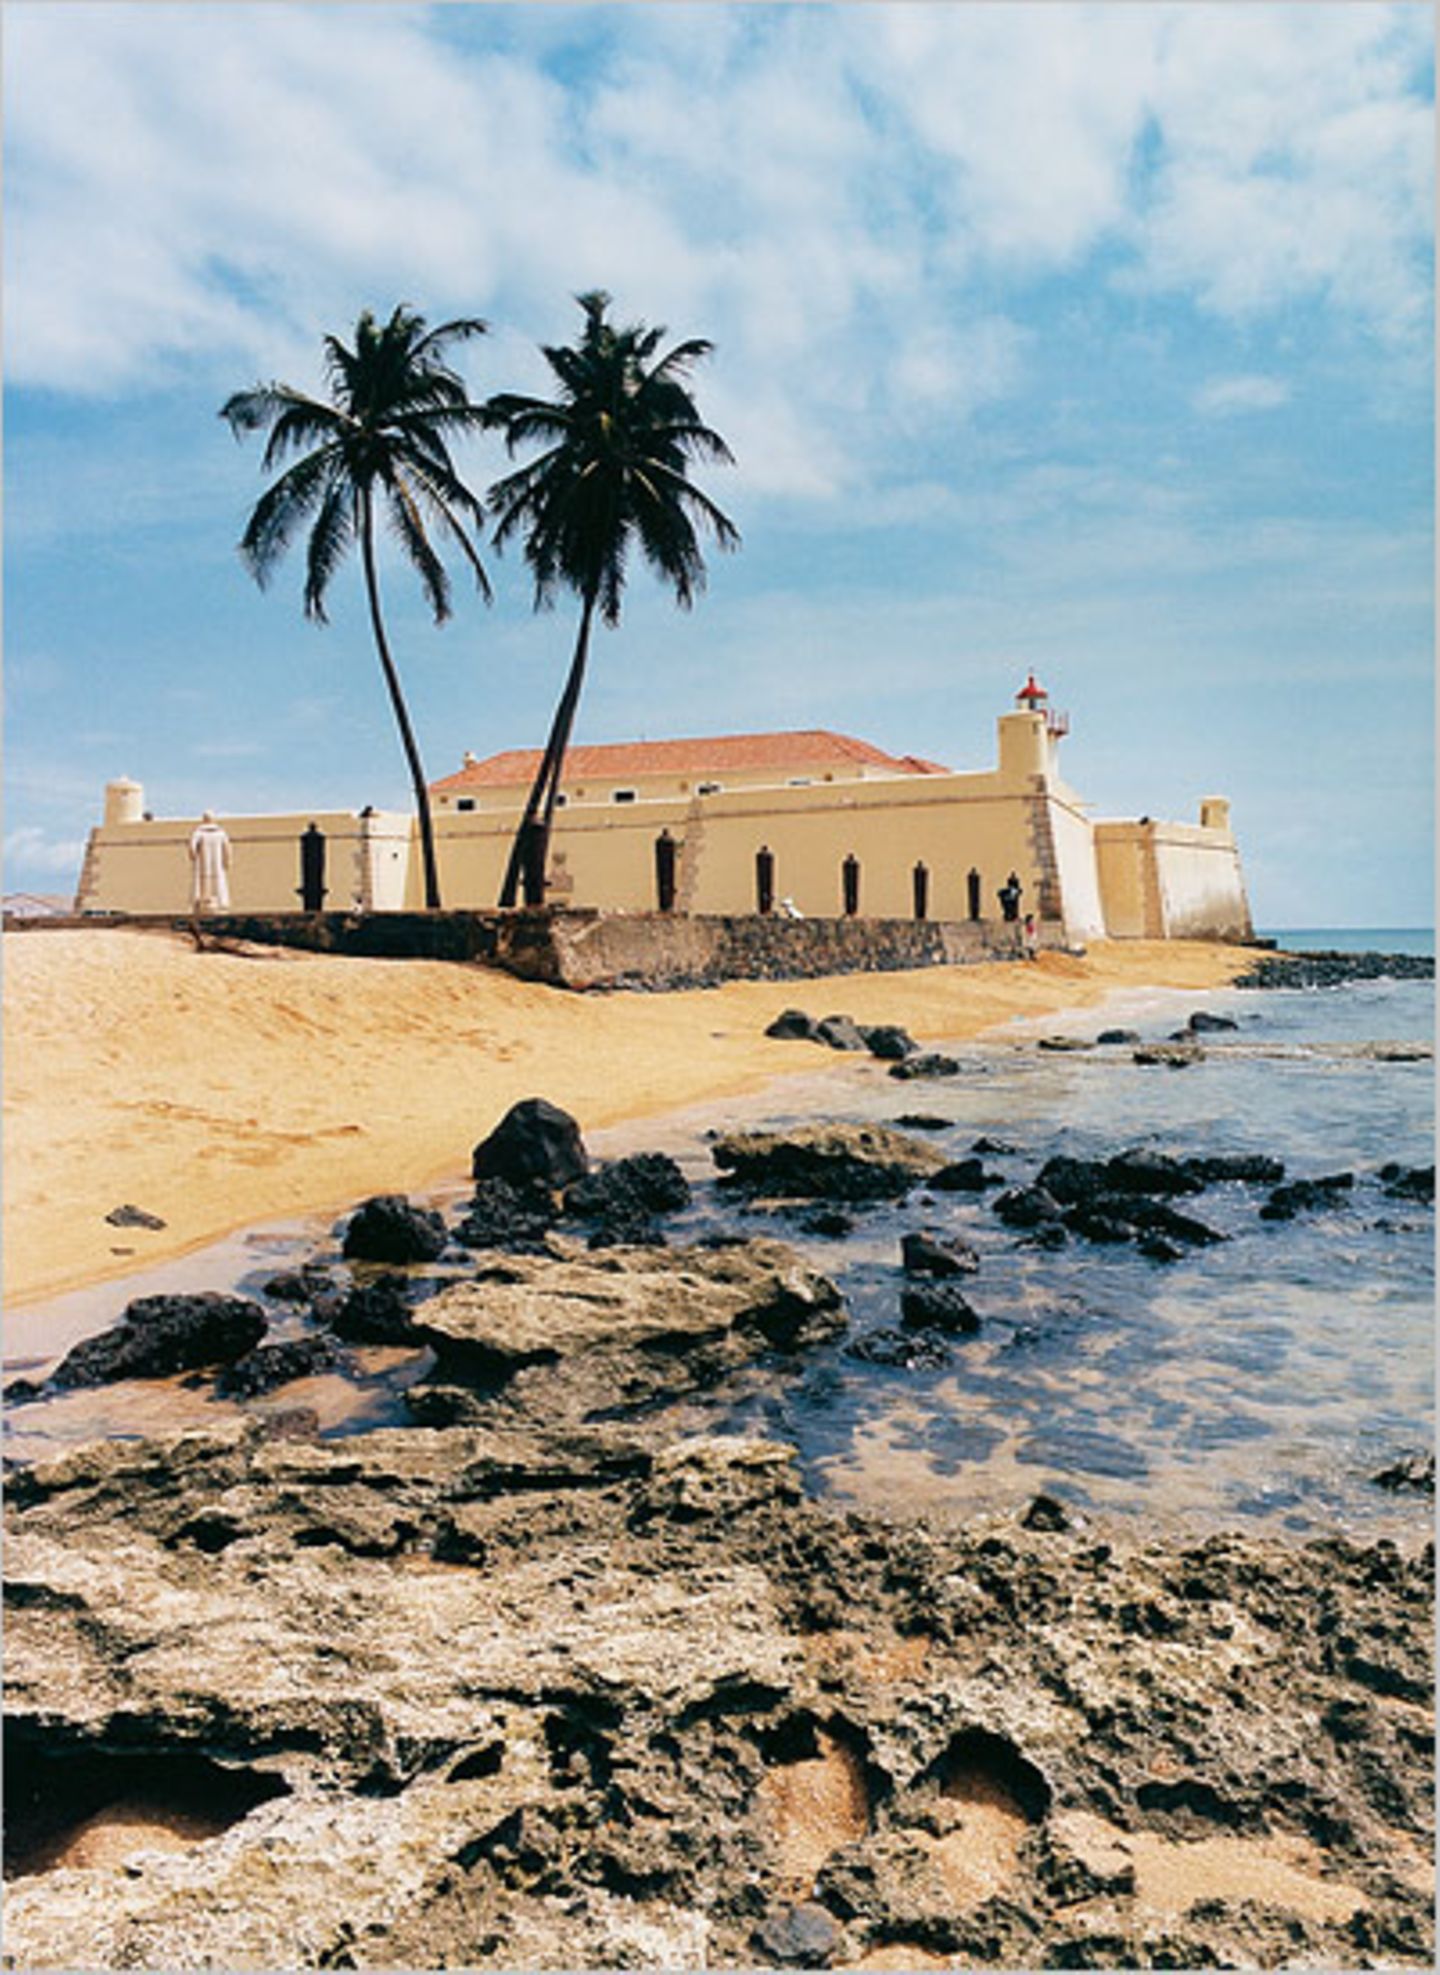 São Tomé & Príncipe: Inseln der Illusionen - Bild 5